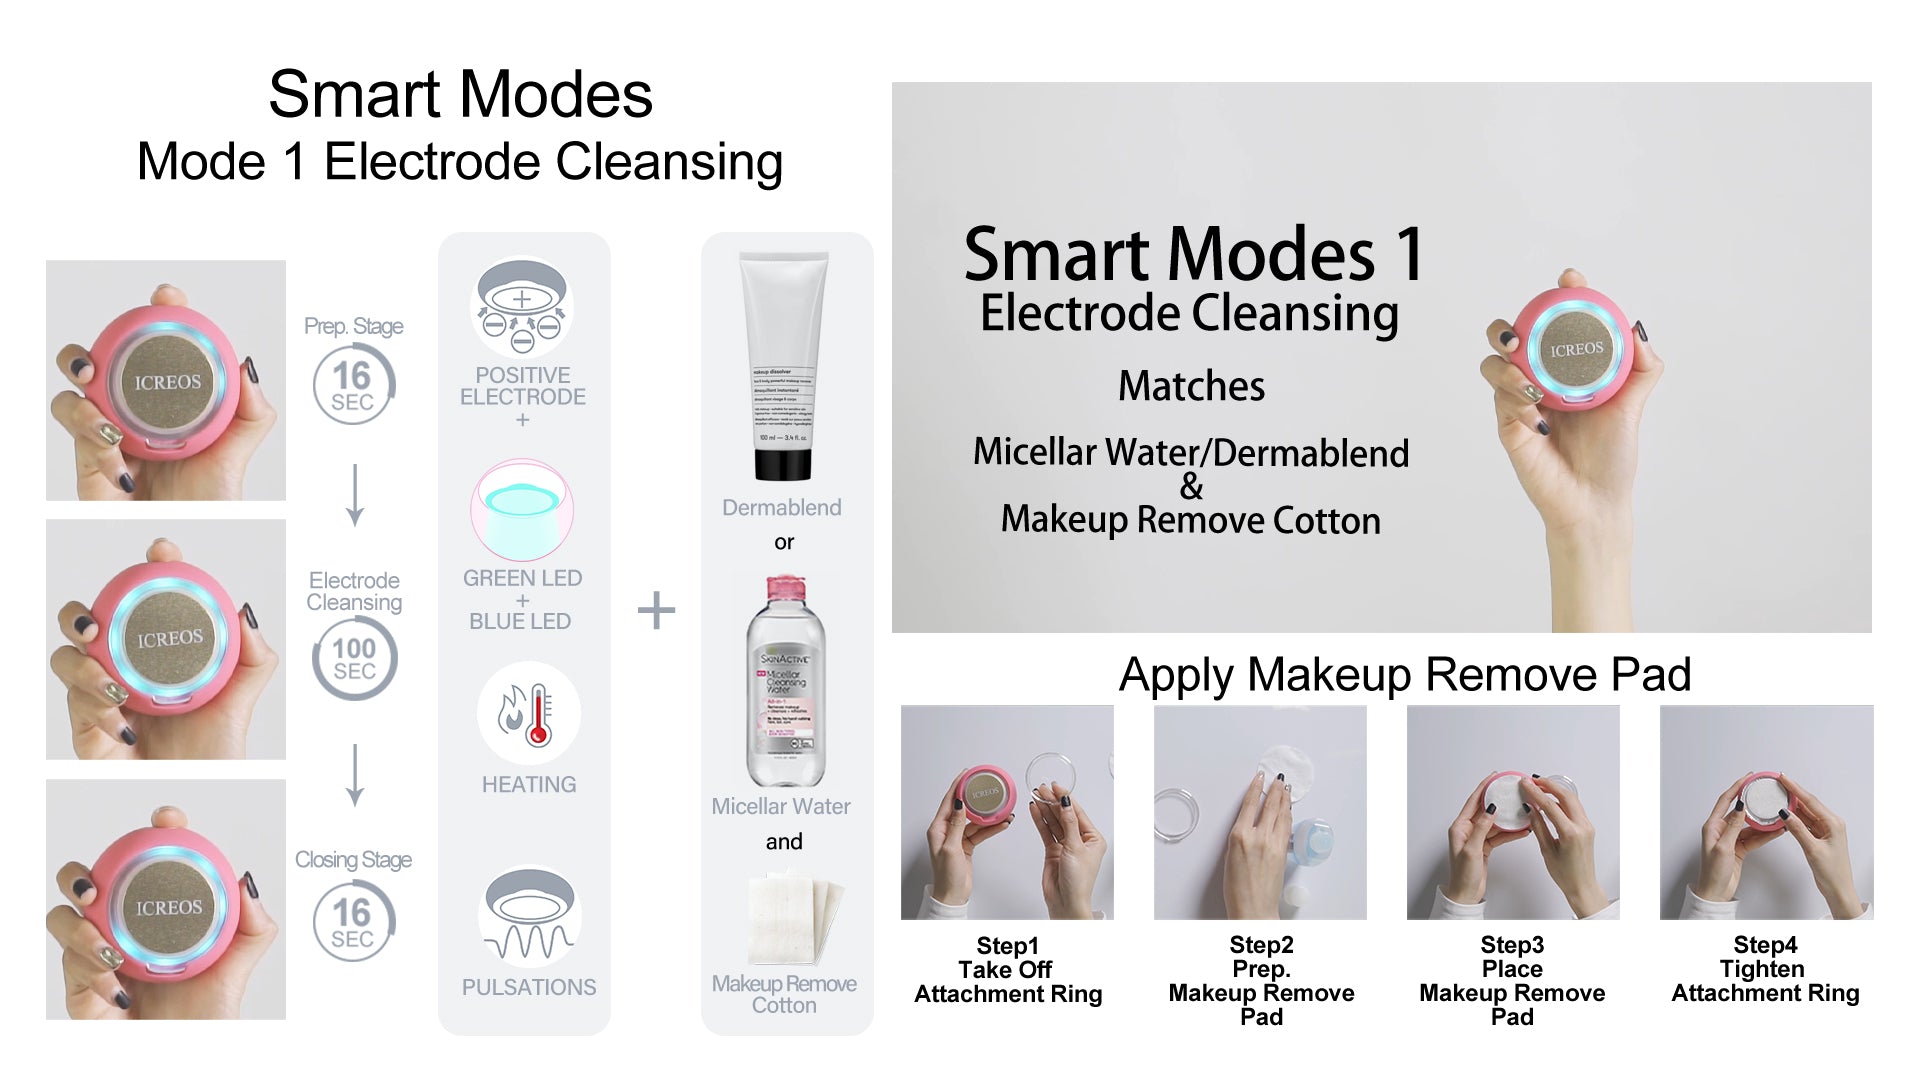 ICREOSMNI-Smart_Modes_1-Electrode_Cleansing-0